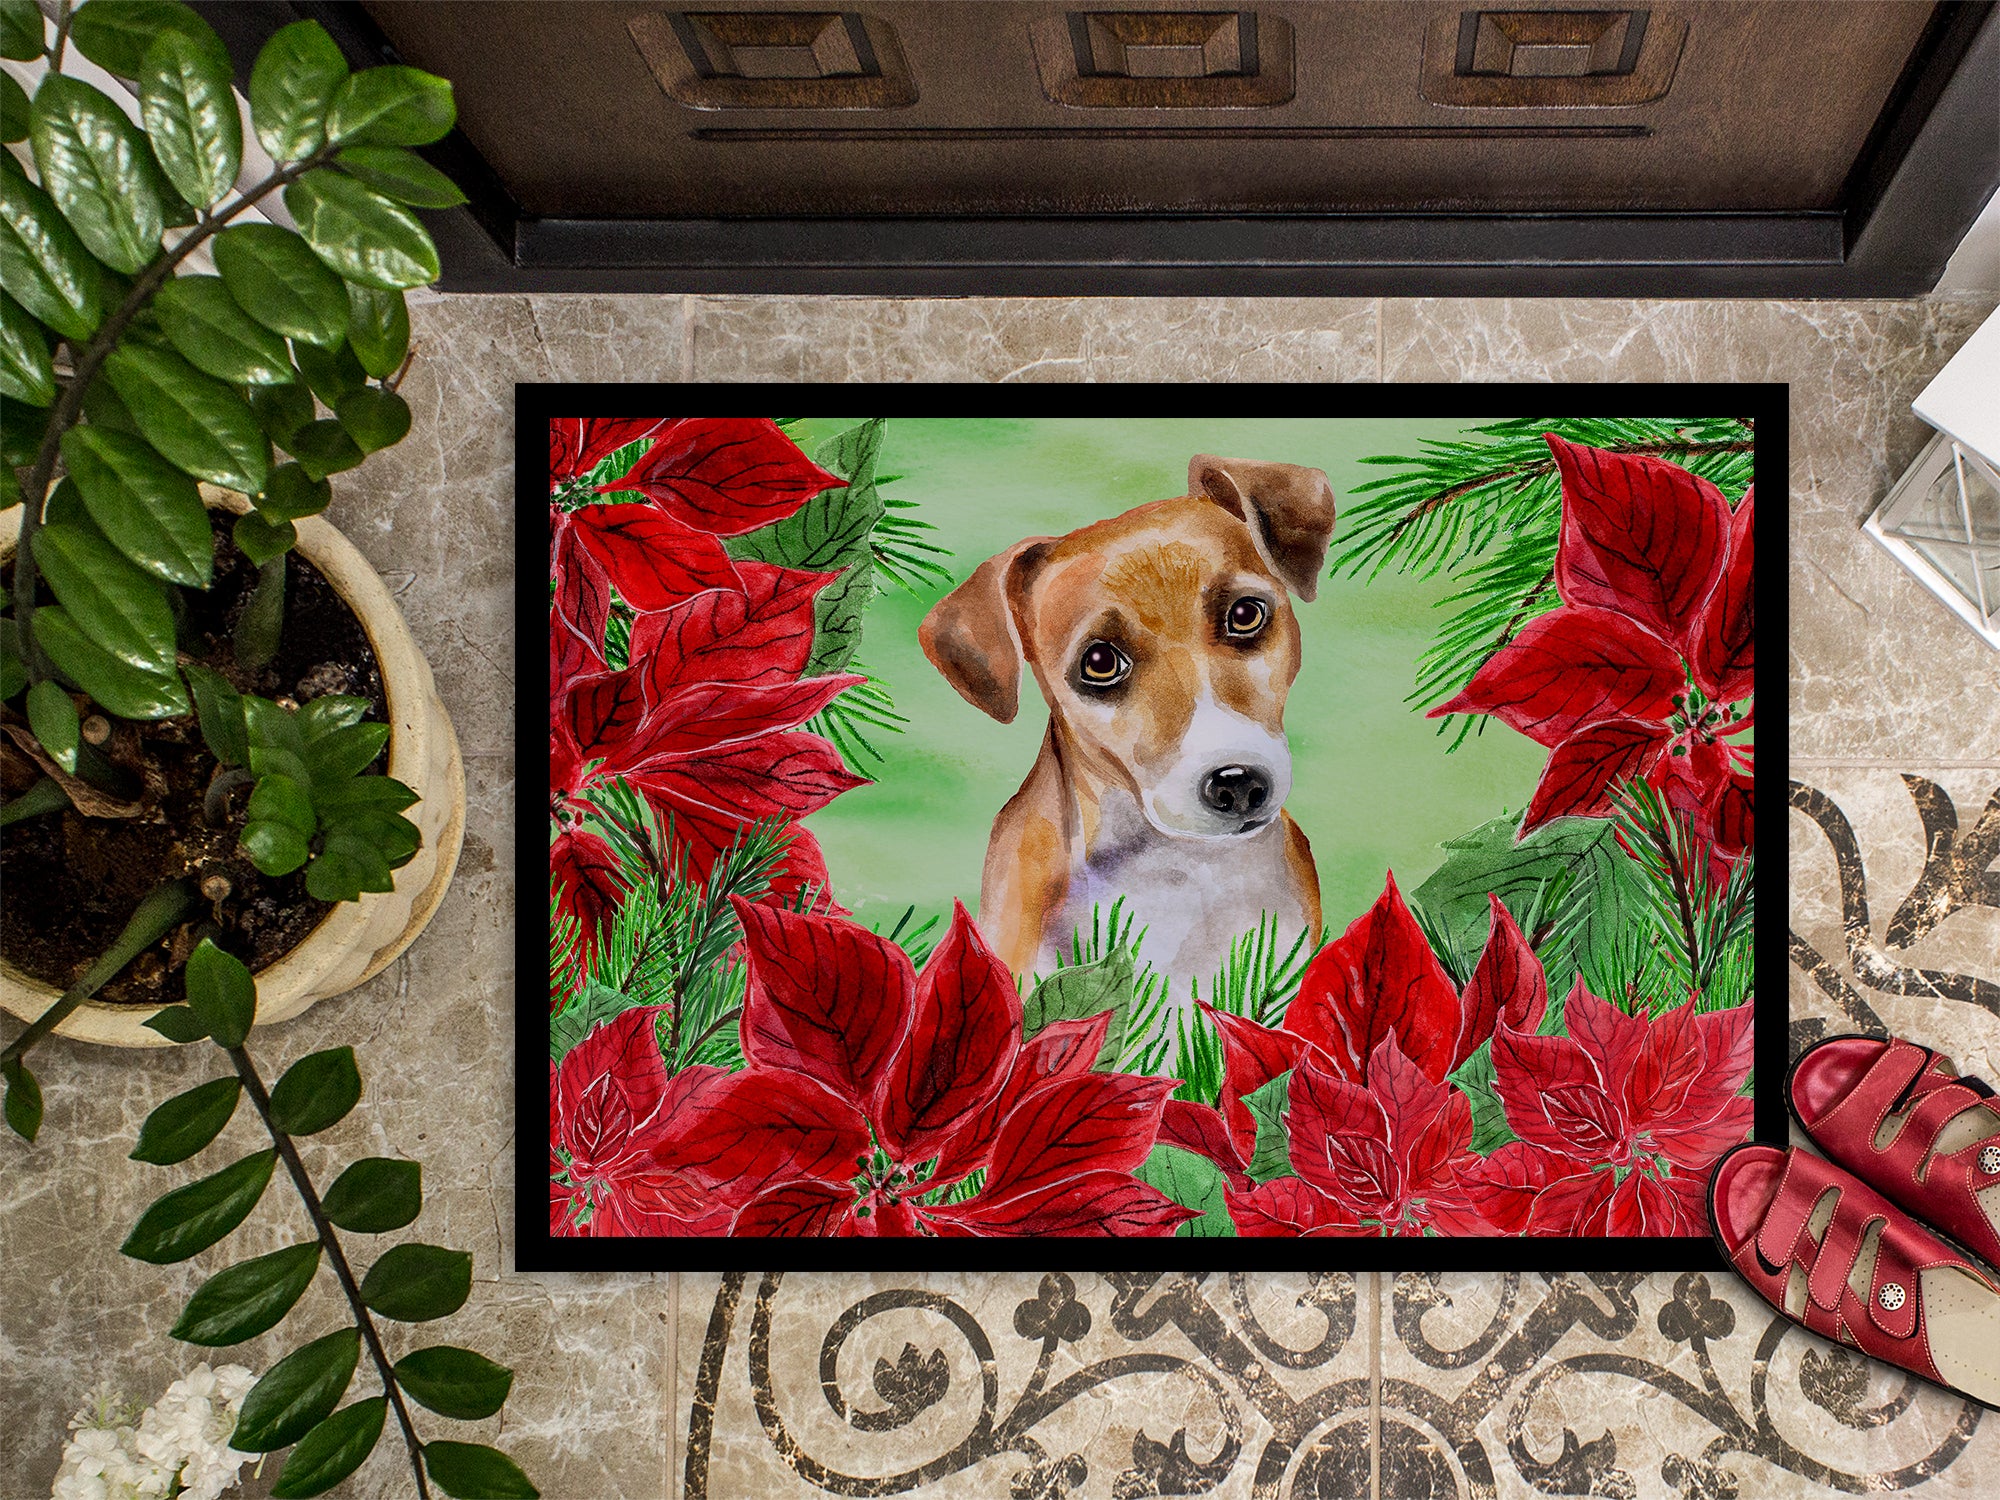 Jack Russell Terrier #2 Poinsettas Indoor or Outdoor Mat 18x27 CK1360MAT - the-store.com